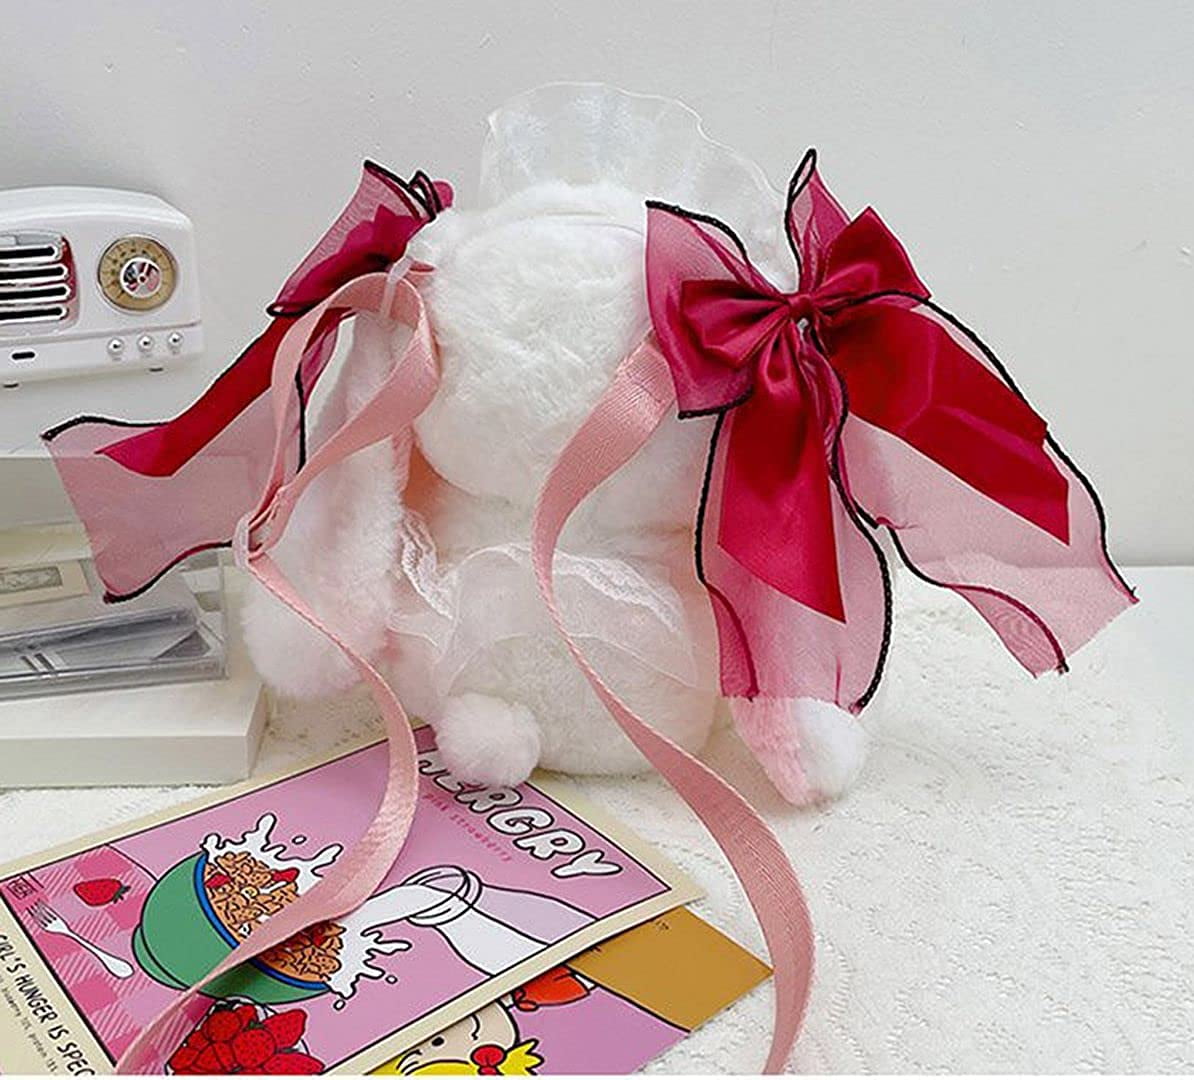 Bunny bunny 🐰 #bags #inspiredbags #fashion #louisvuitton